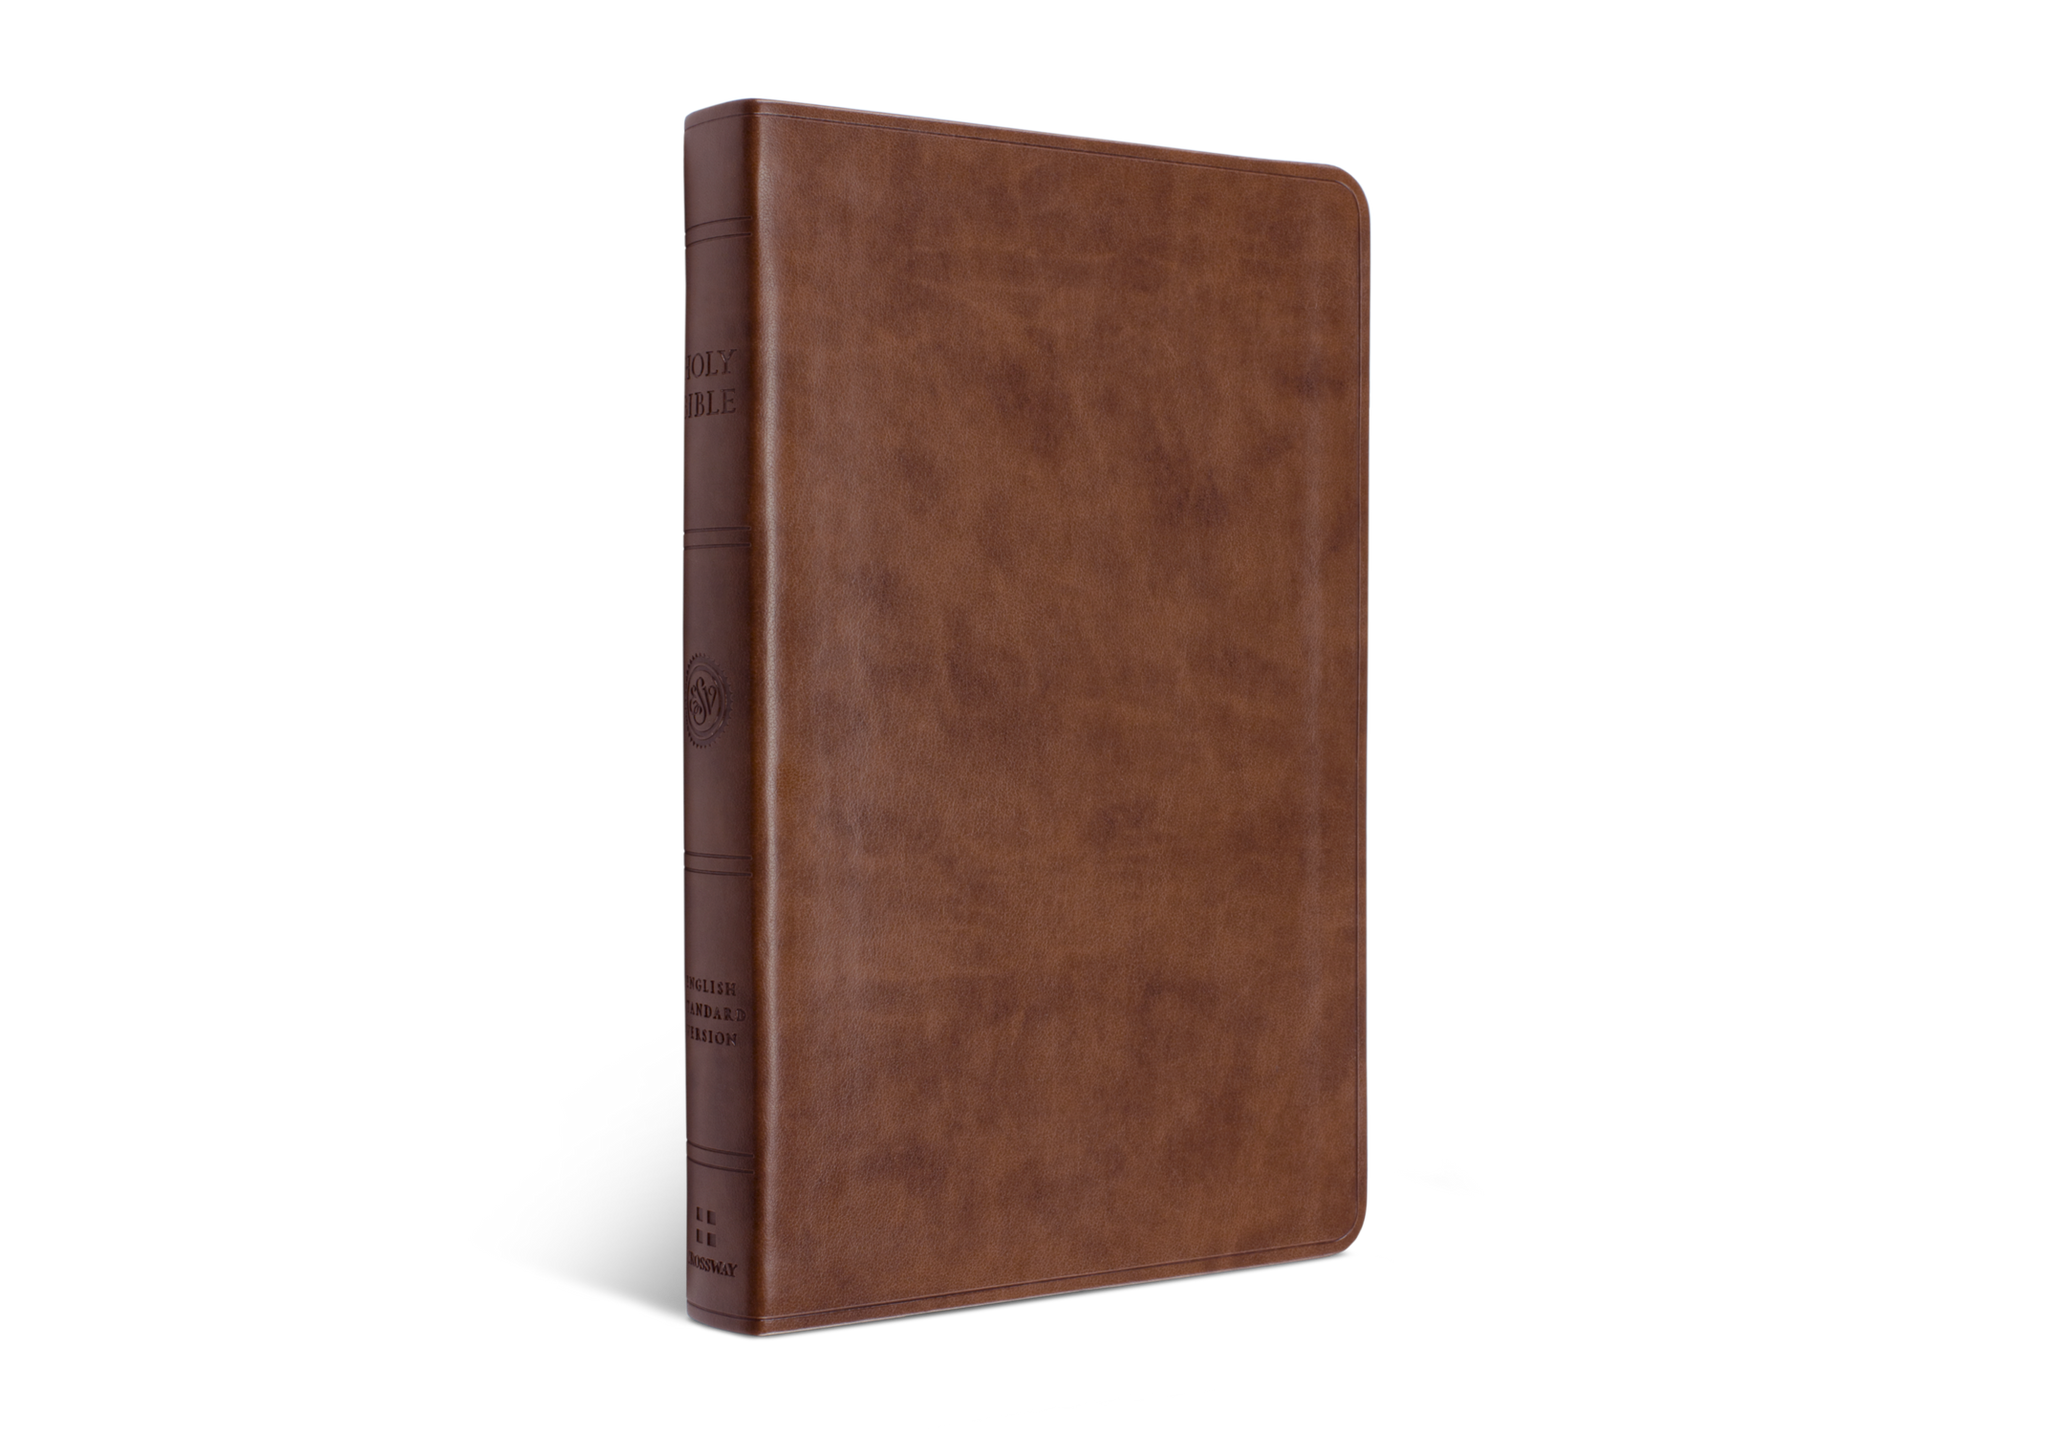 ESV Premium Gift Bible - Brown